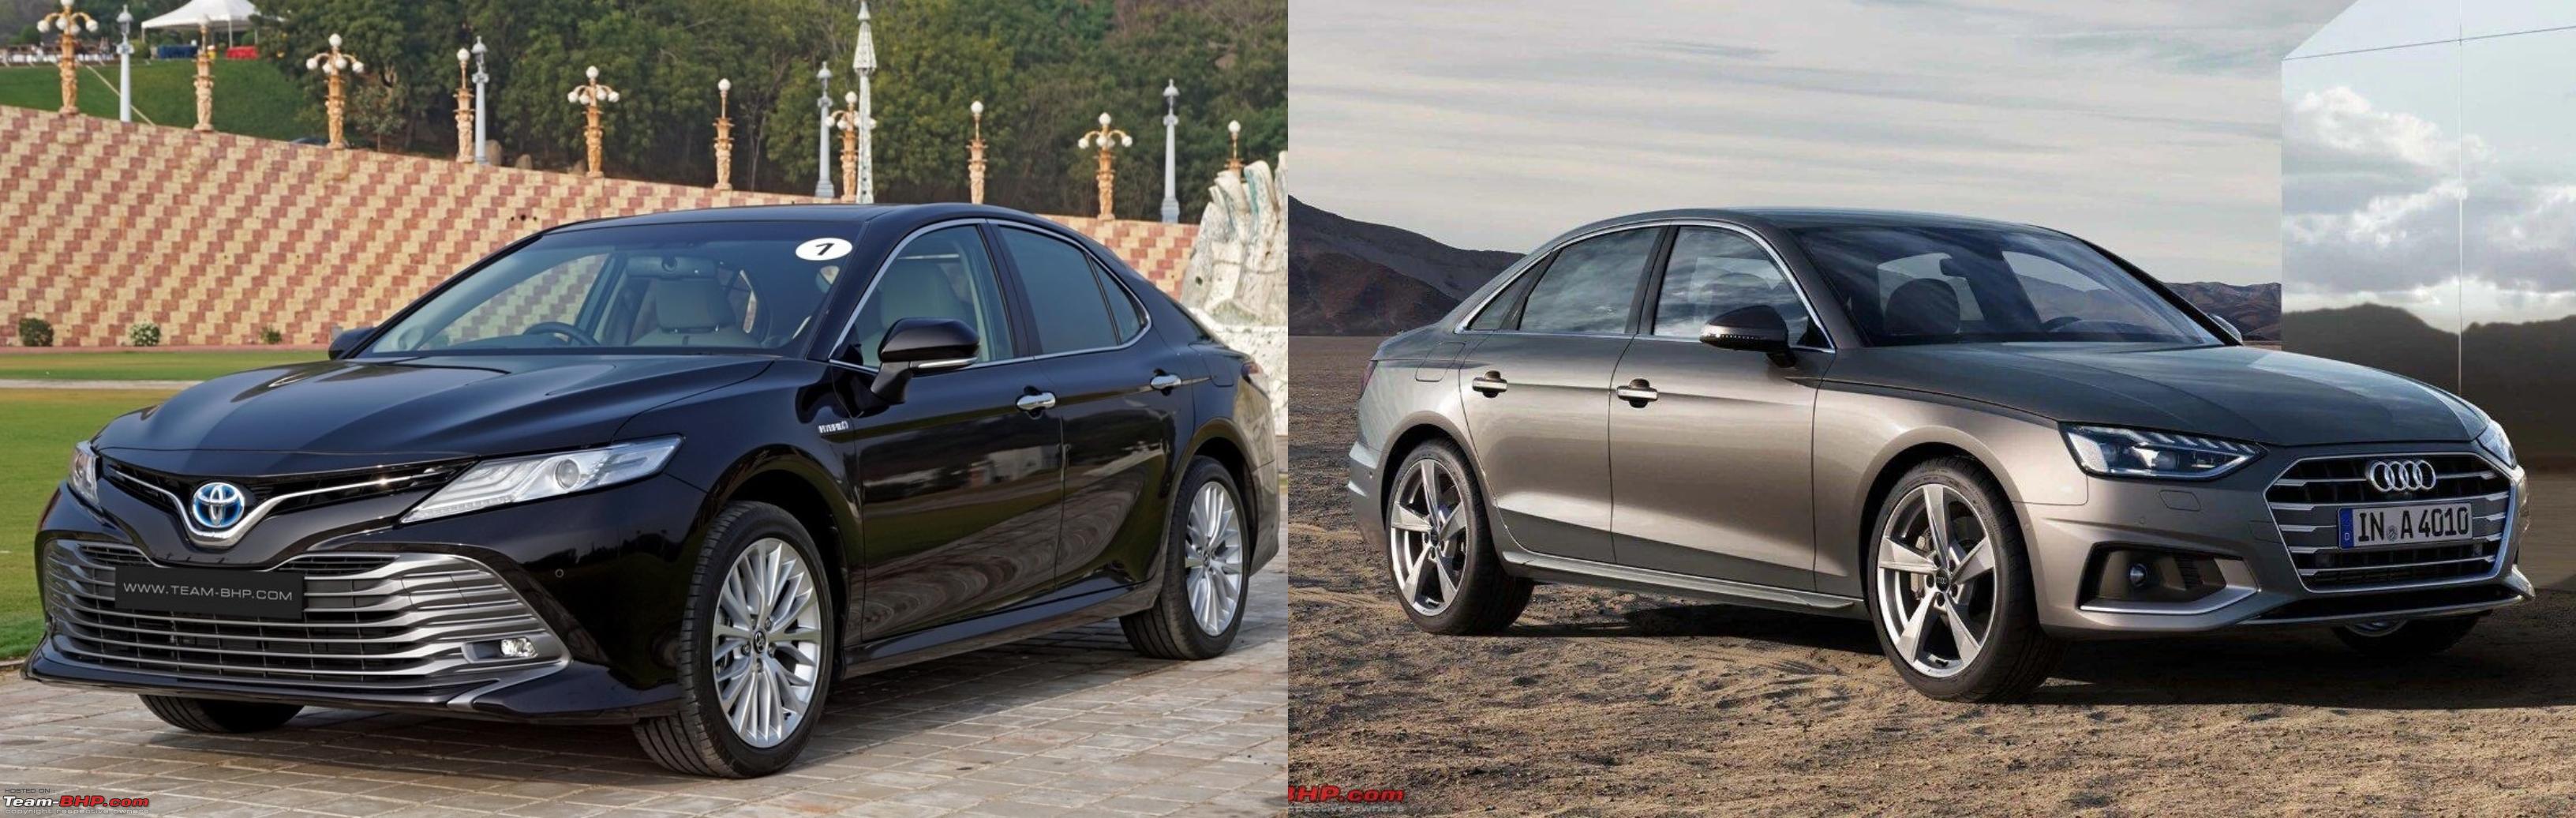 Compare Toyota Camry vs Audi A4 vs Ford Zephyr